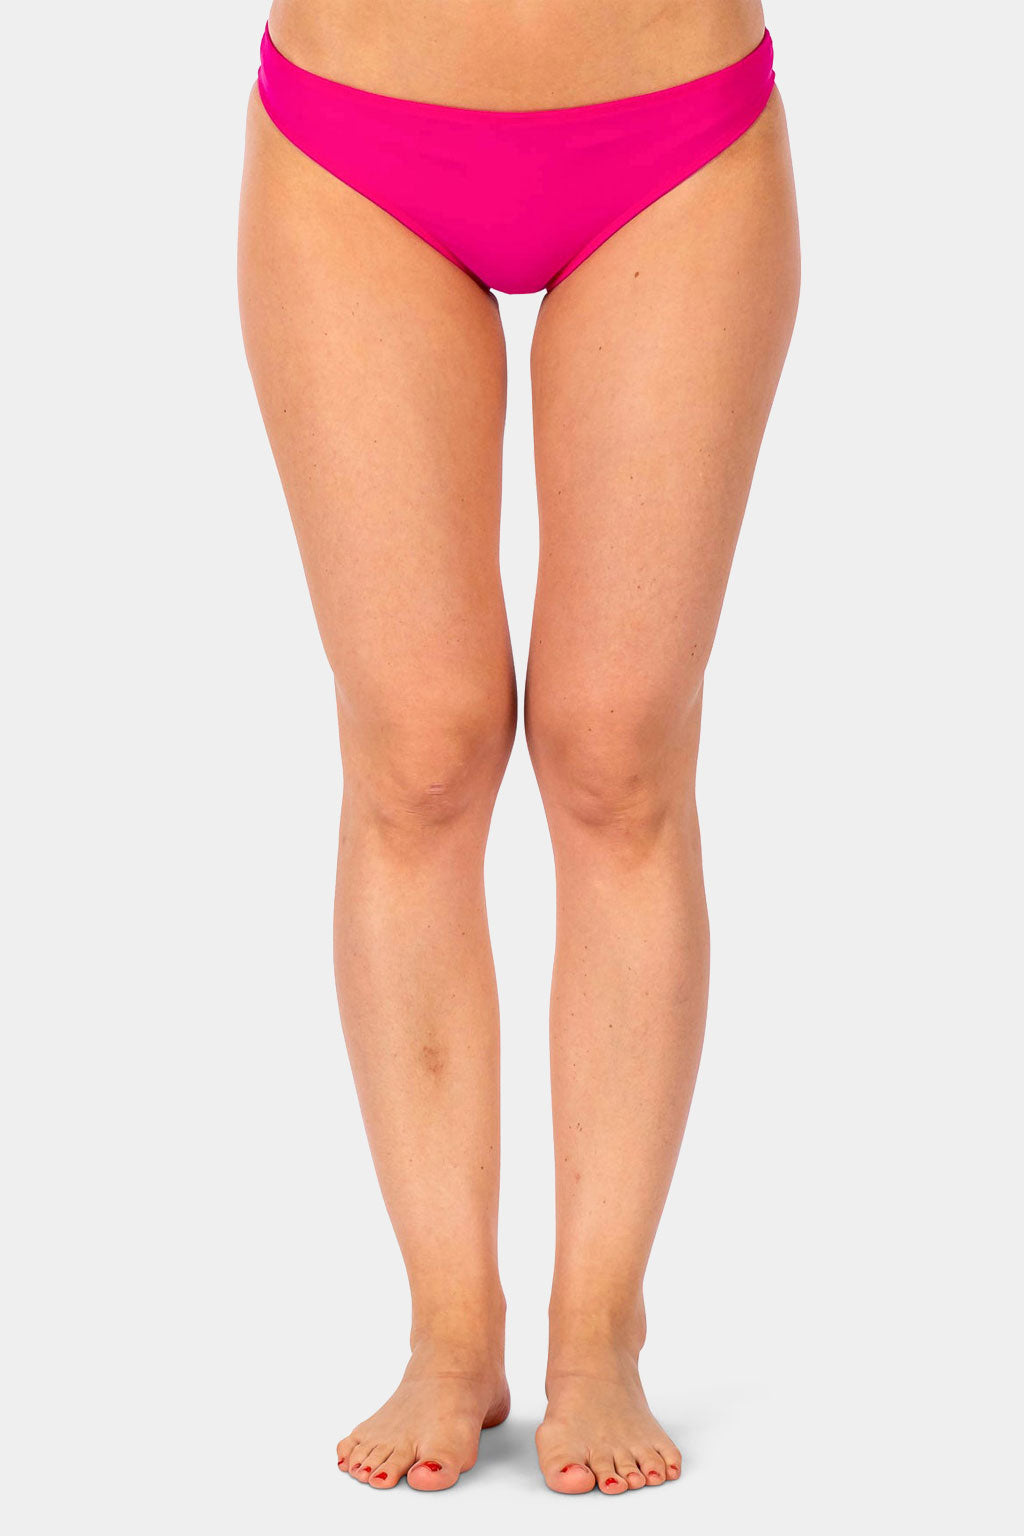 Coega - Ladies Bikini Bottom Sporty